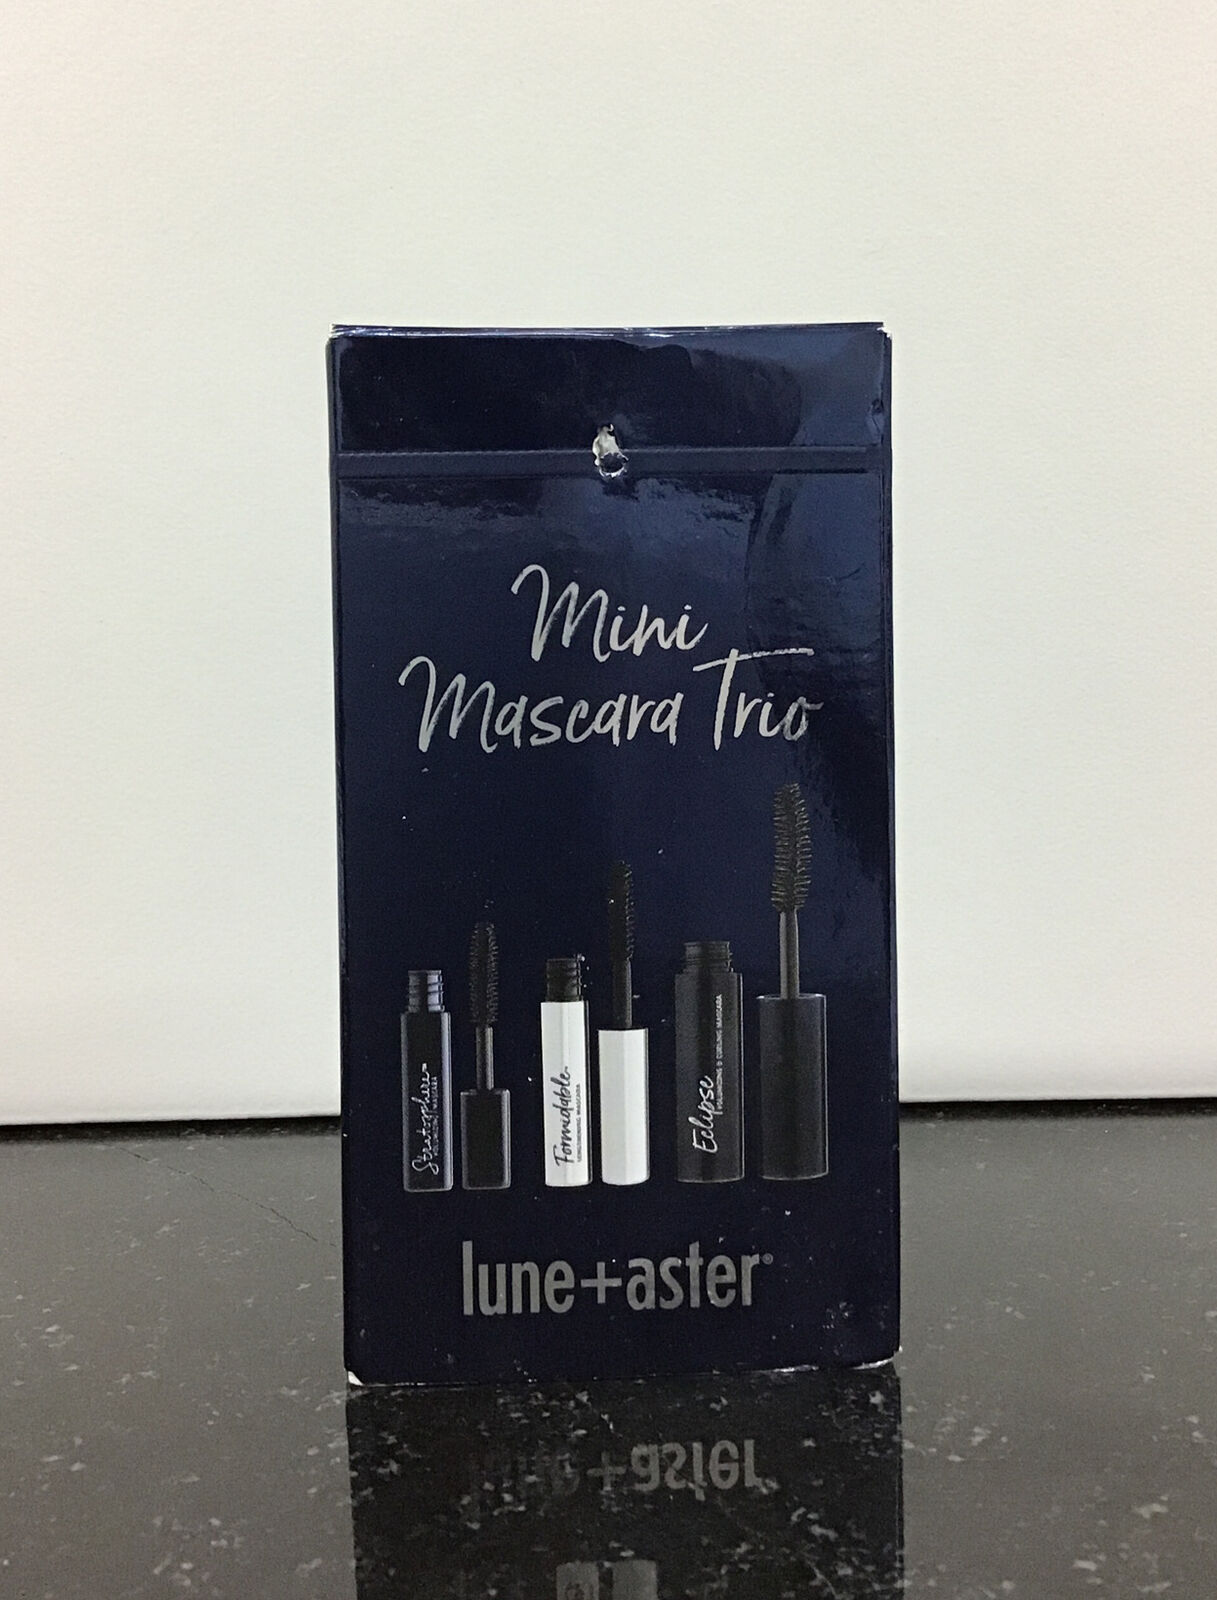 Lune + Aster mini mascara trio volumizing, lengthening, eclipse curling mascara.